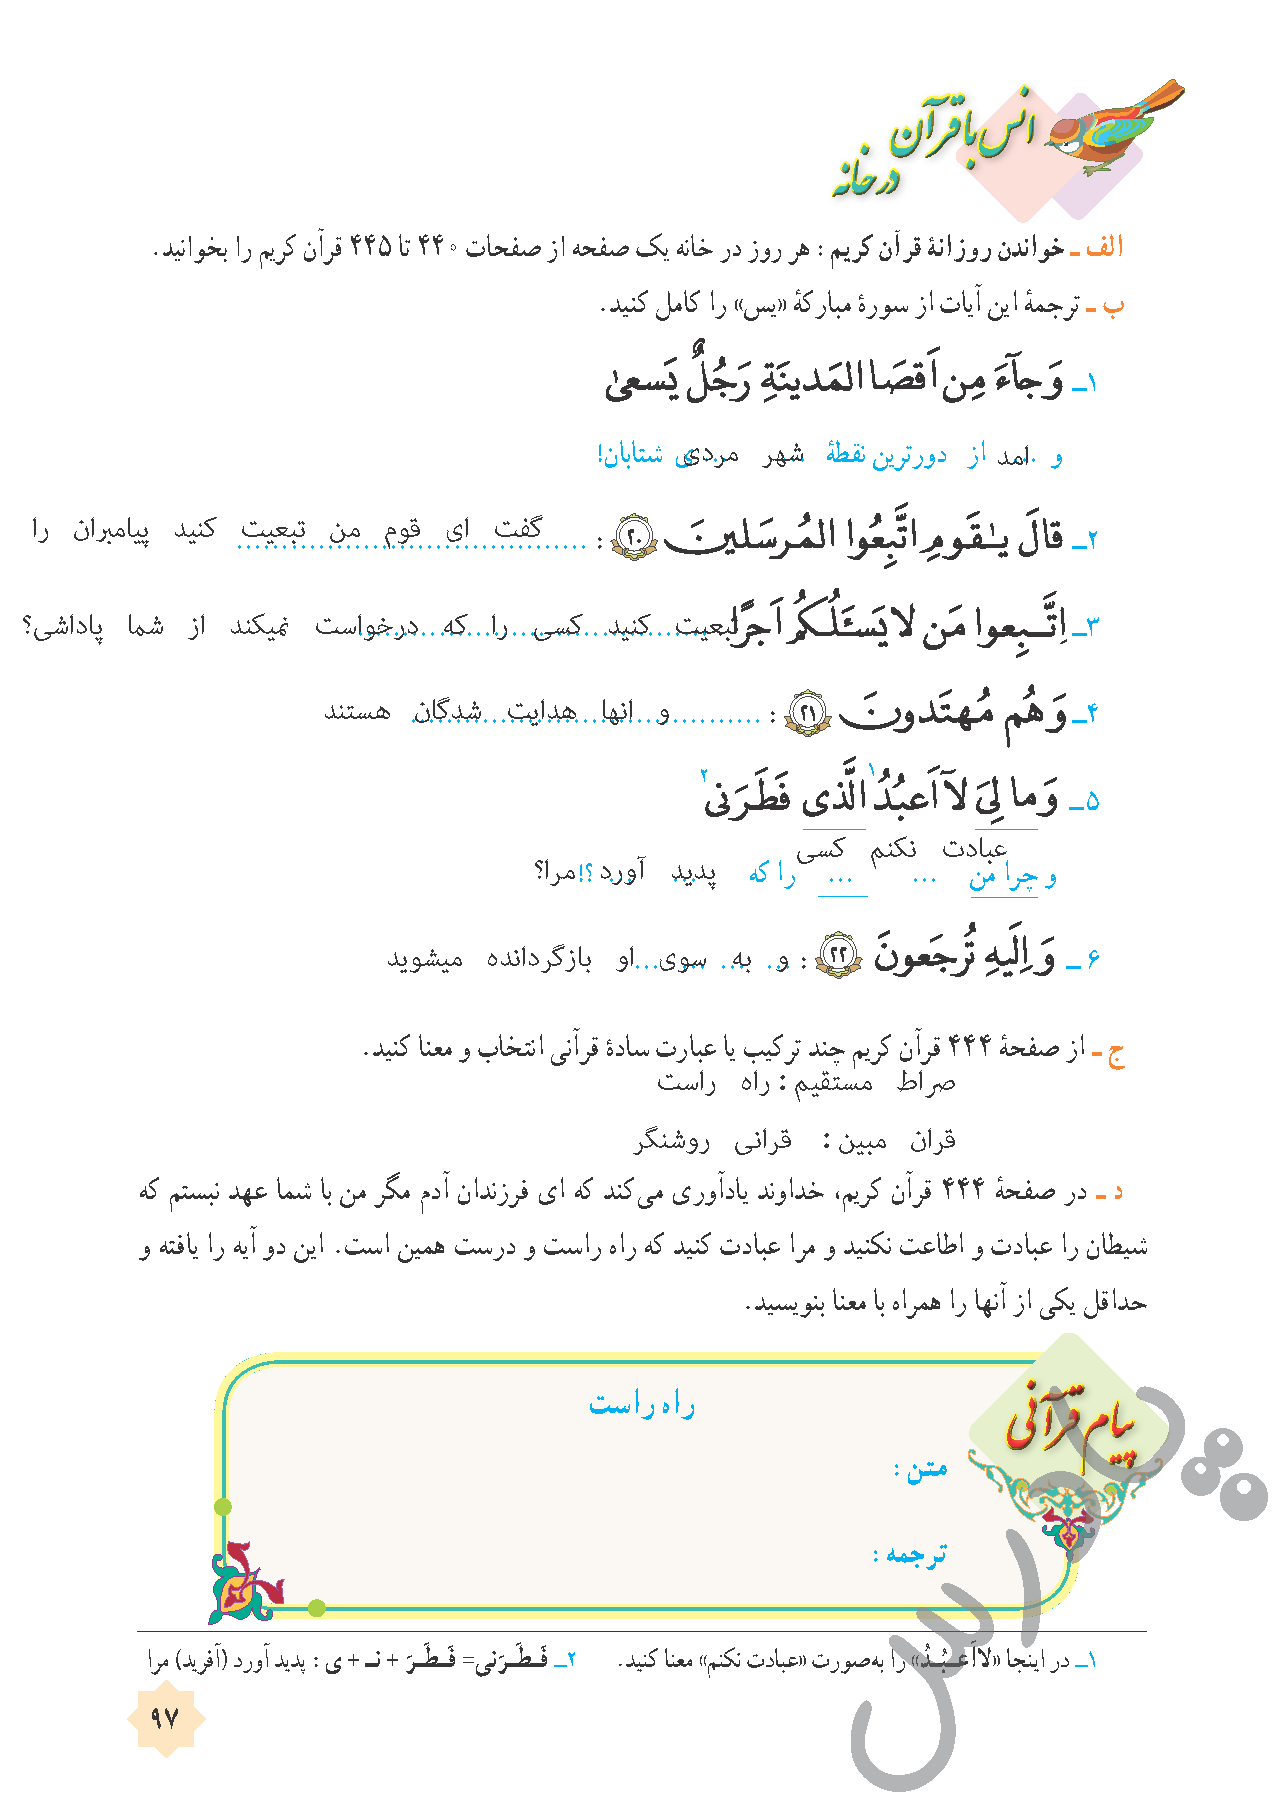 جواب فعالیت سوم  درس 10 قرآن هشتم -جلسه اول